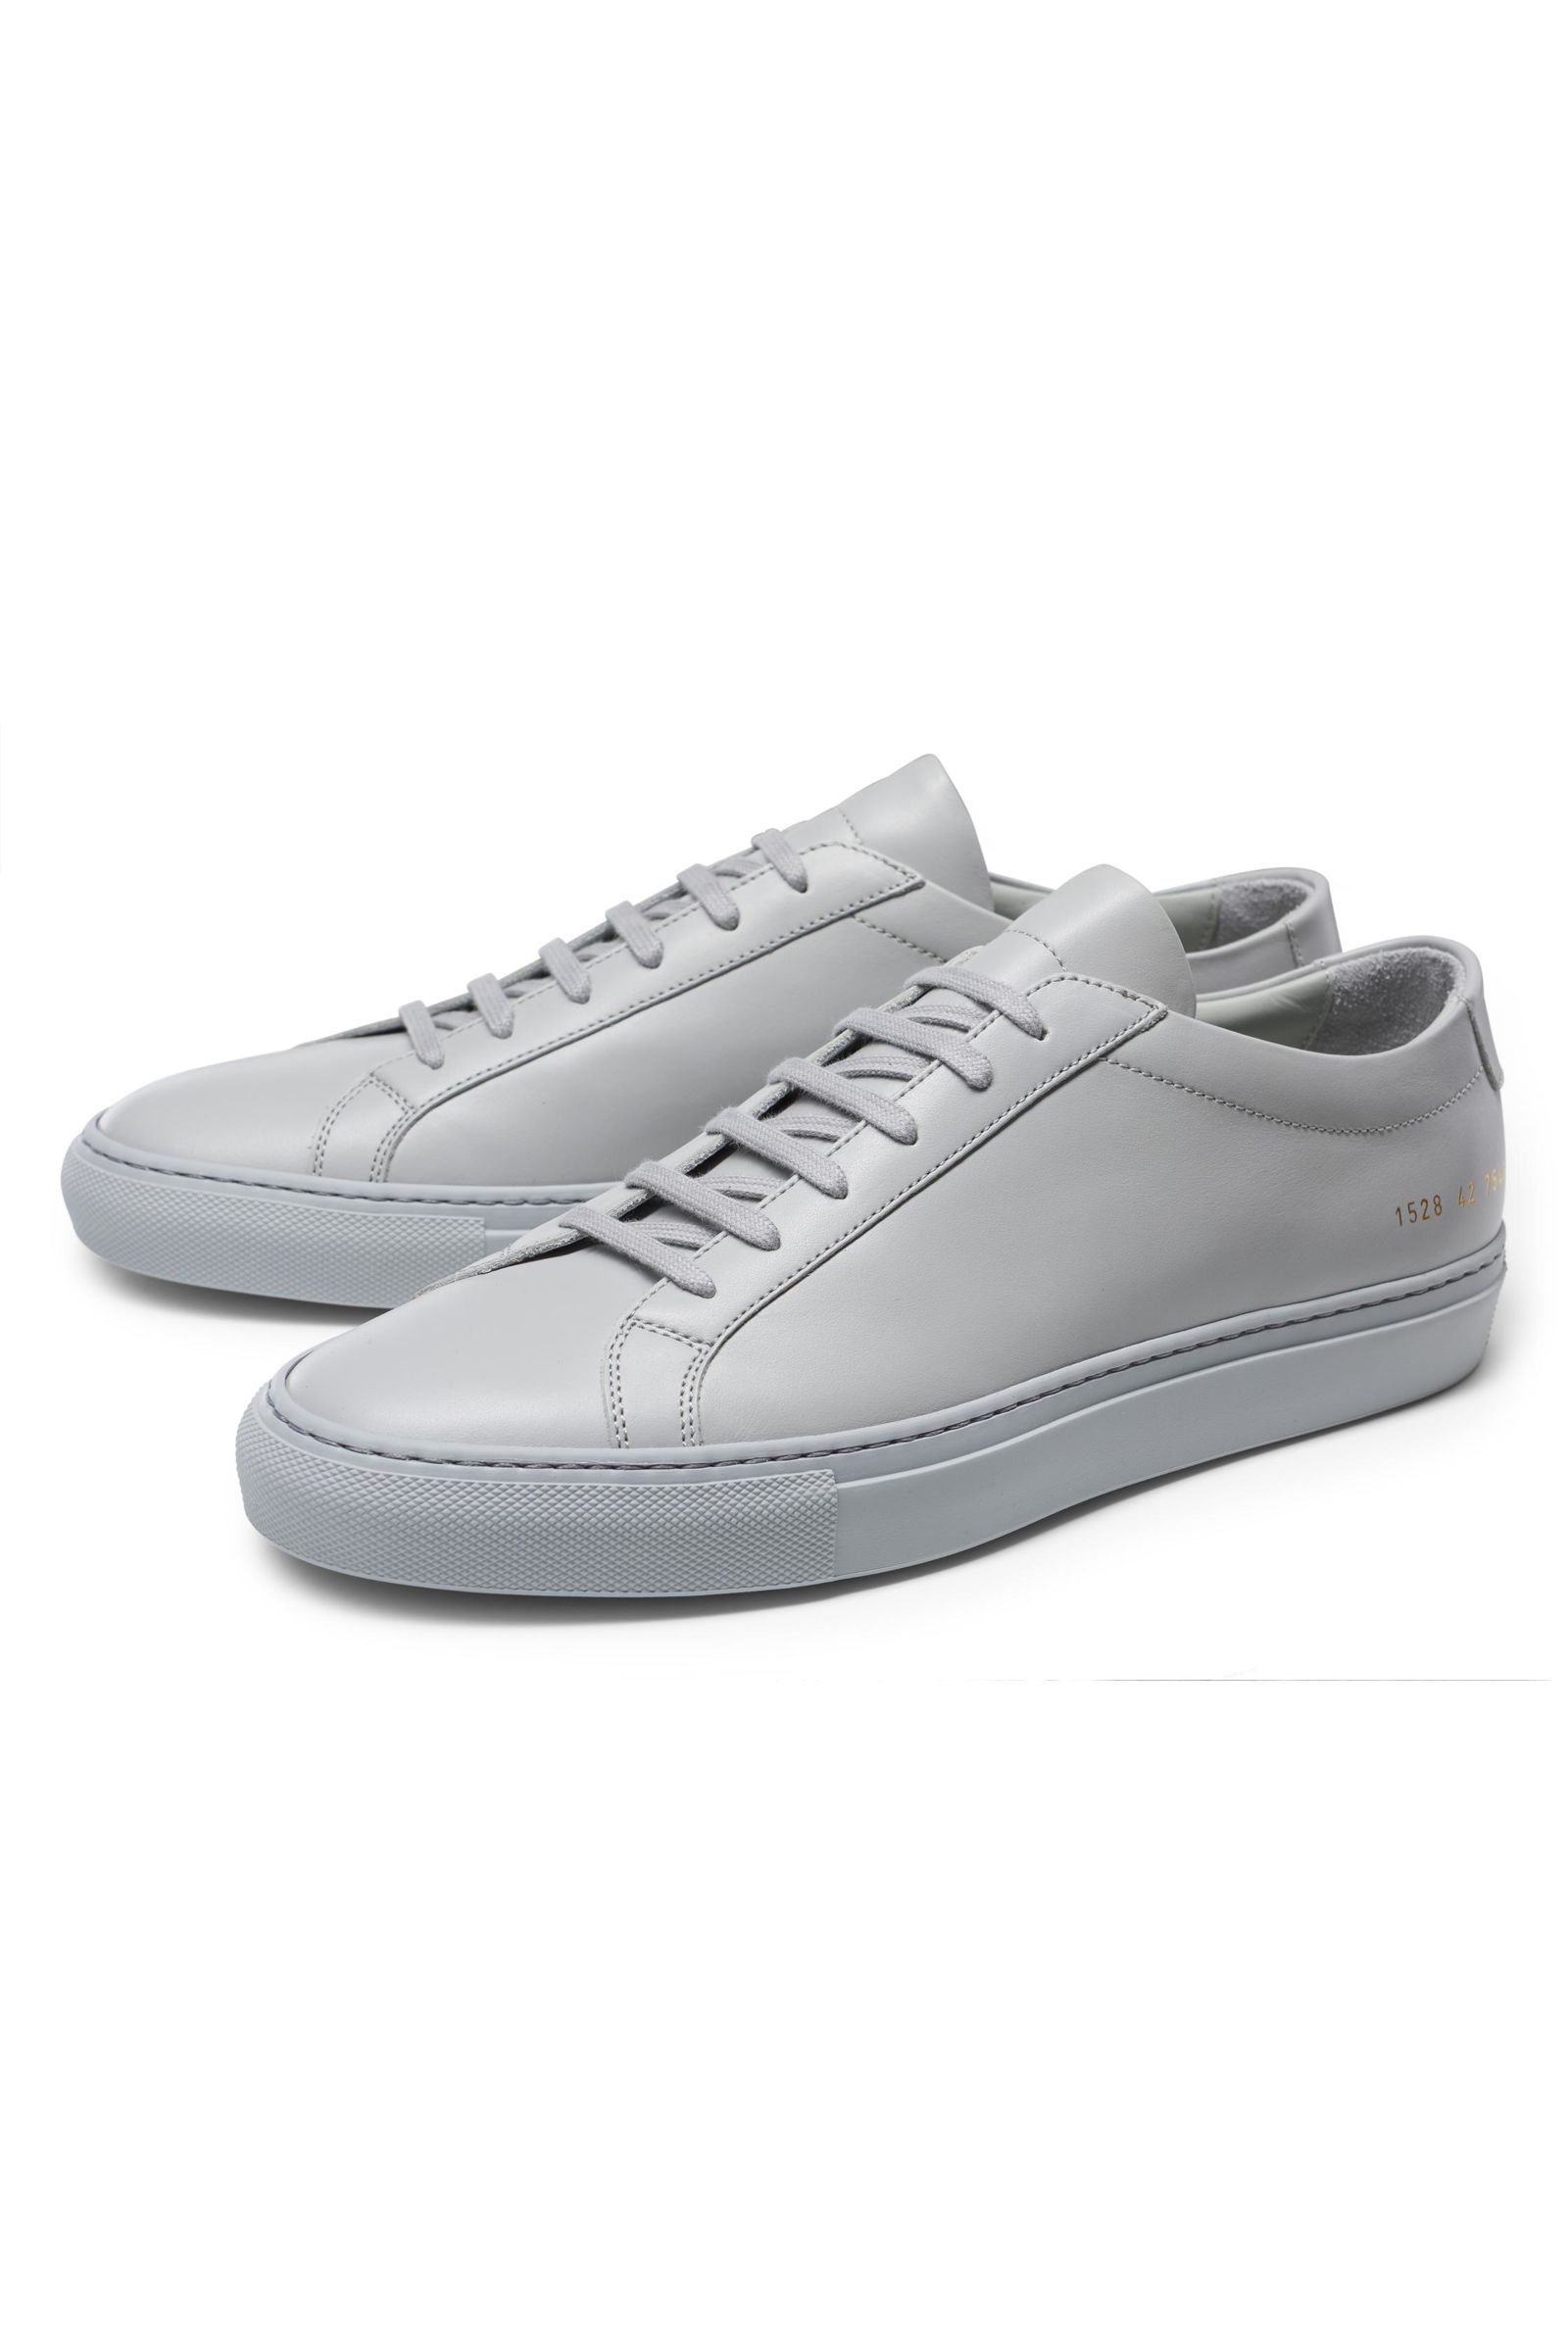 'Original Achilles' sneakers in grey